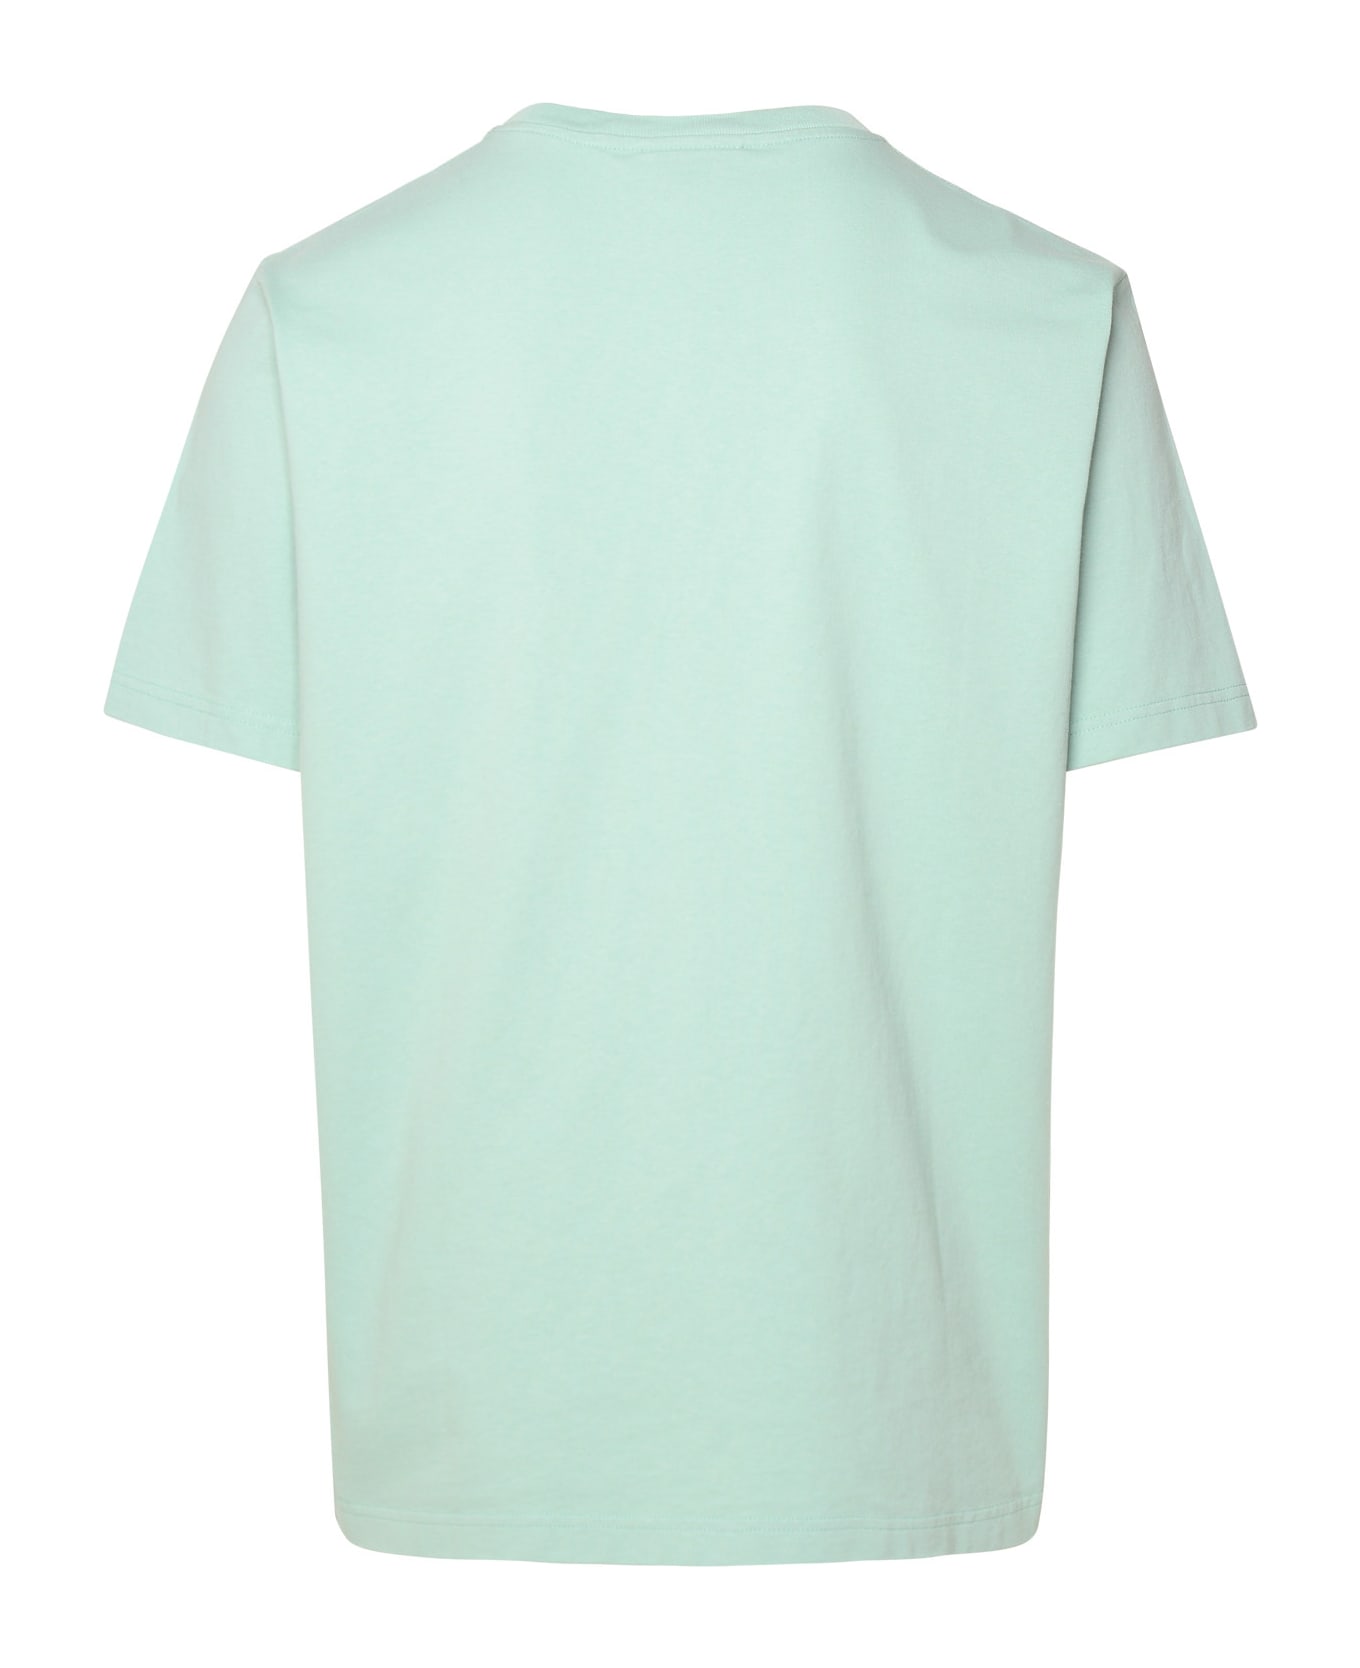 Maison Kitsuné Pastel Turquoise Cotton T-shirt - Light Blue